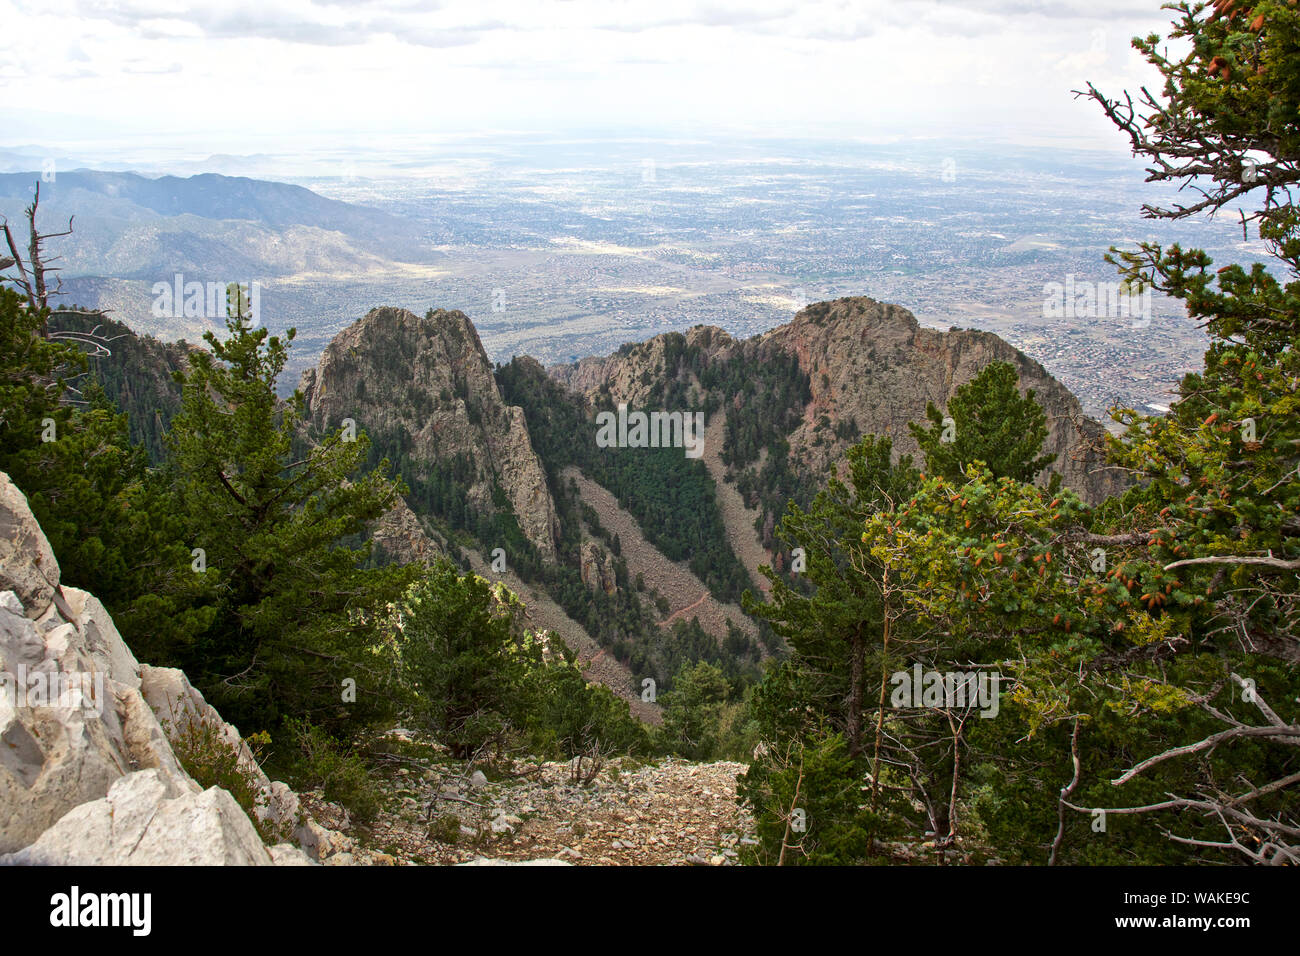 USA, New Mexico, Sandia Crest view Stock Photo